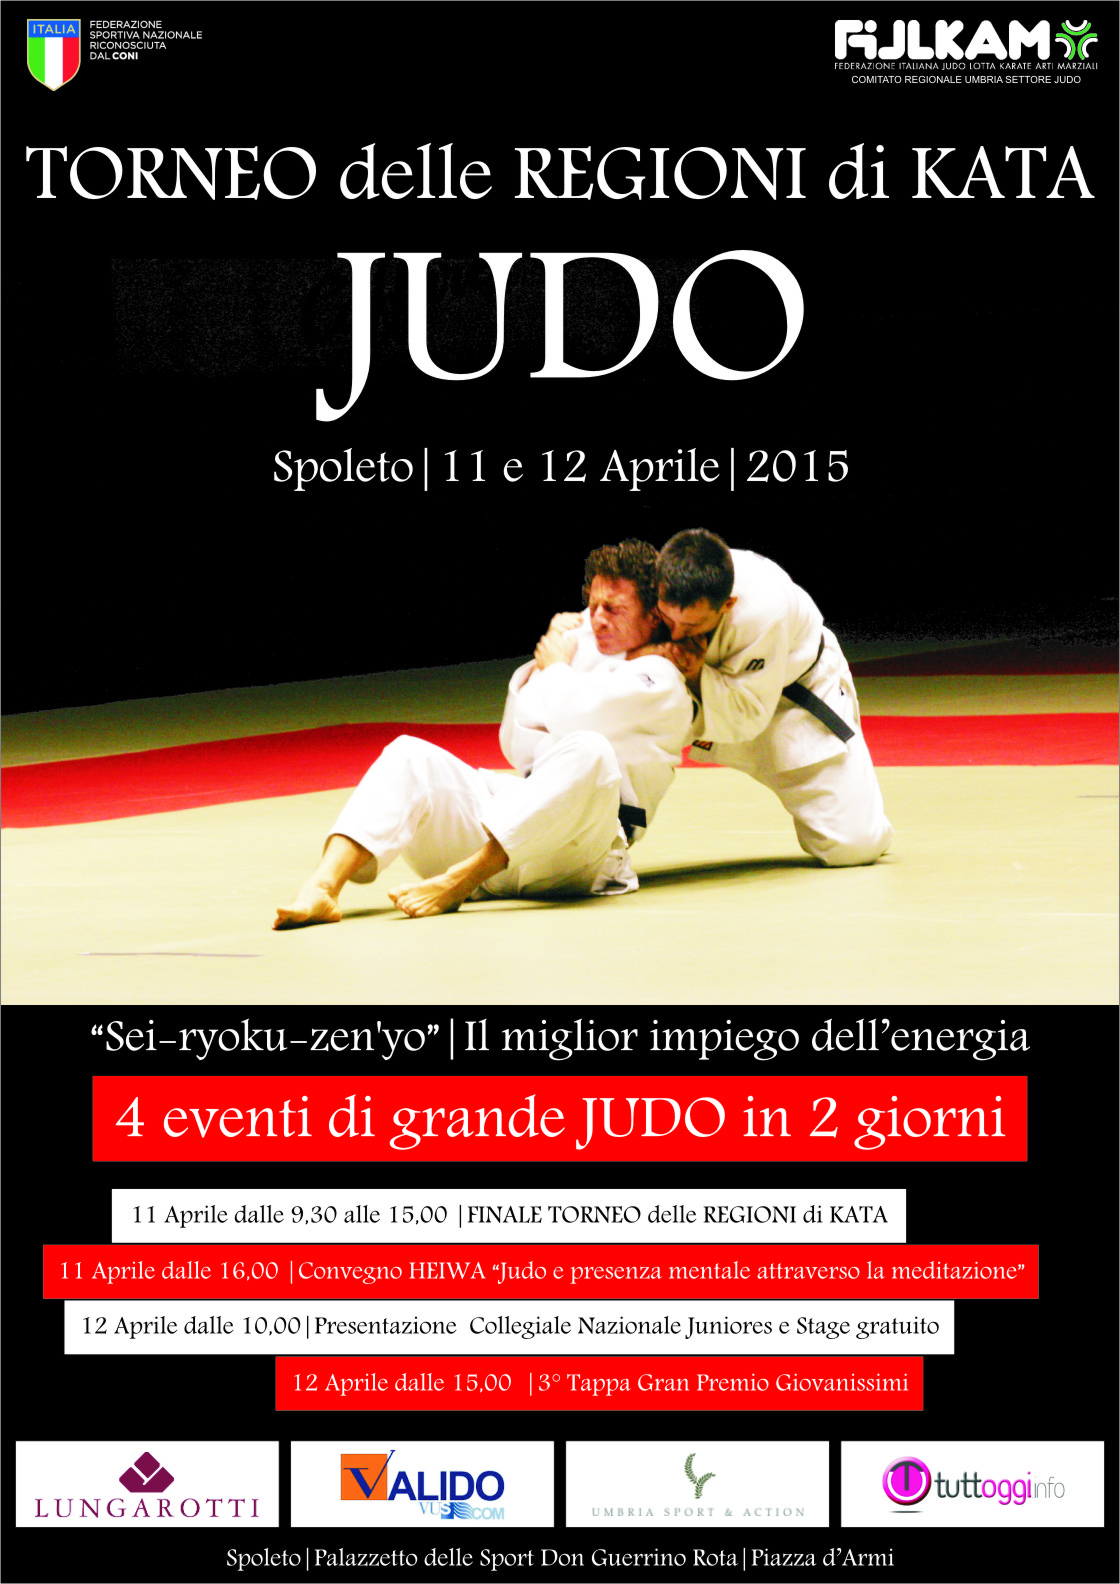 /immagini/Judo/2015/judo_torneodelleregioni_lcandina..jpg